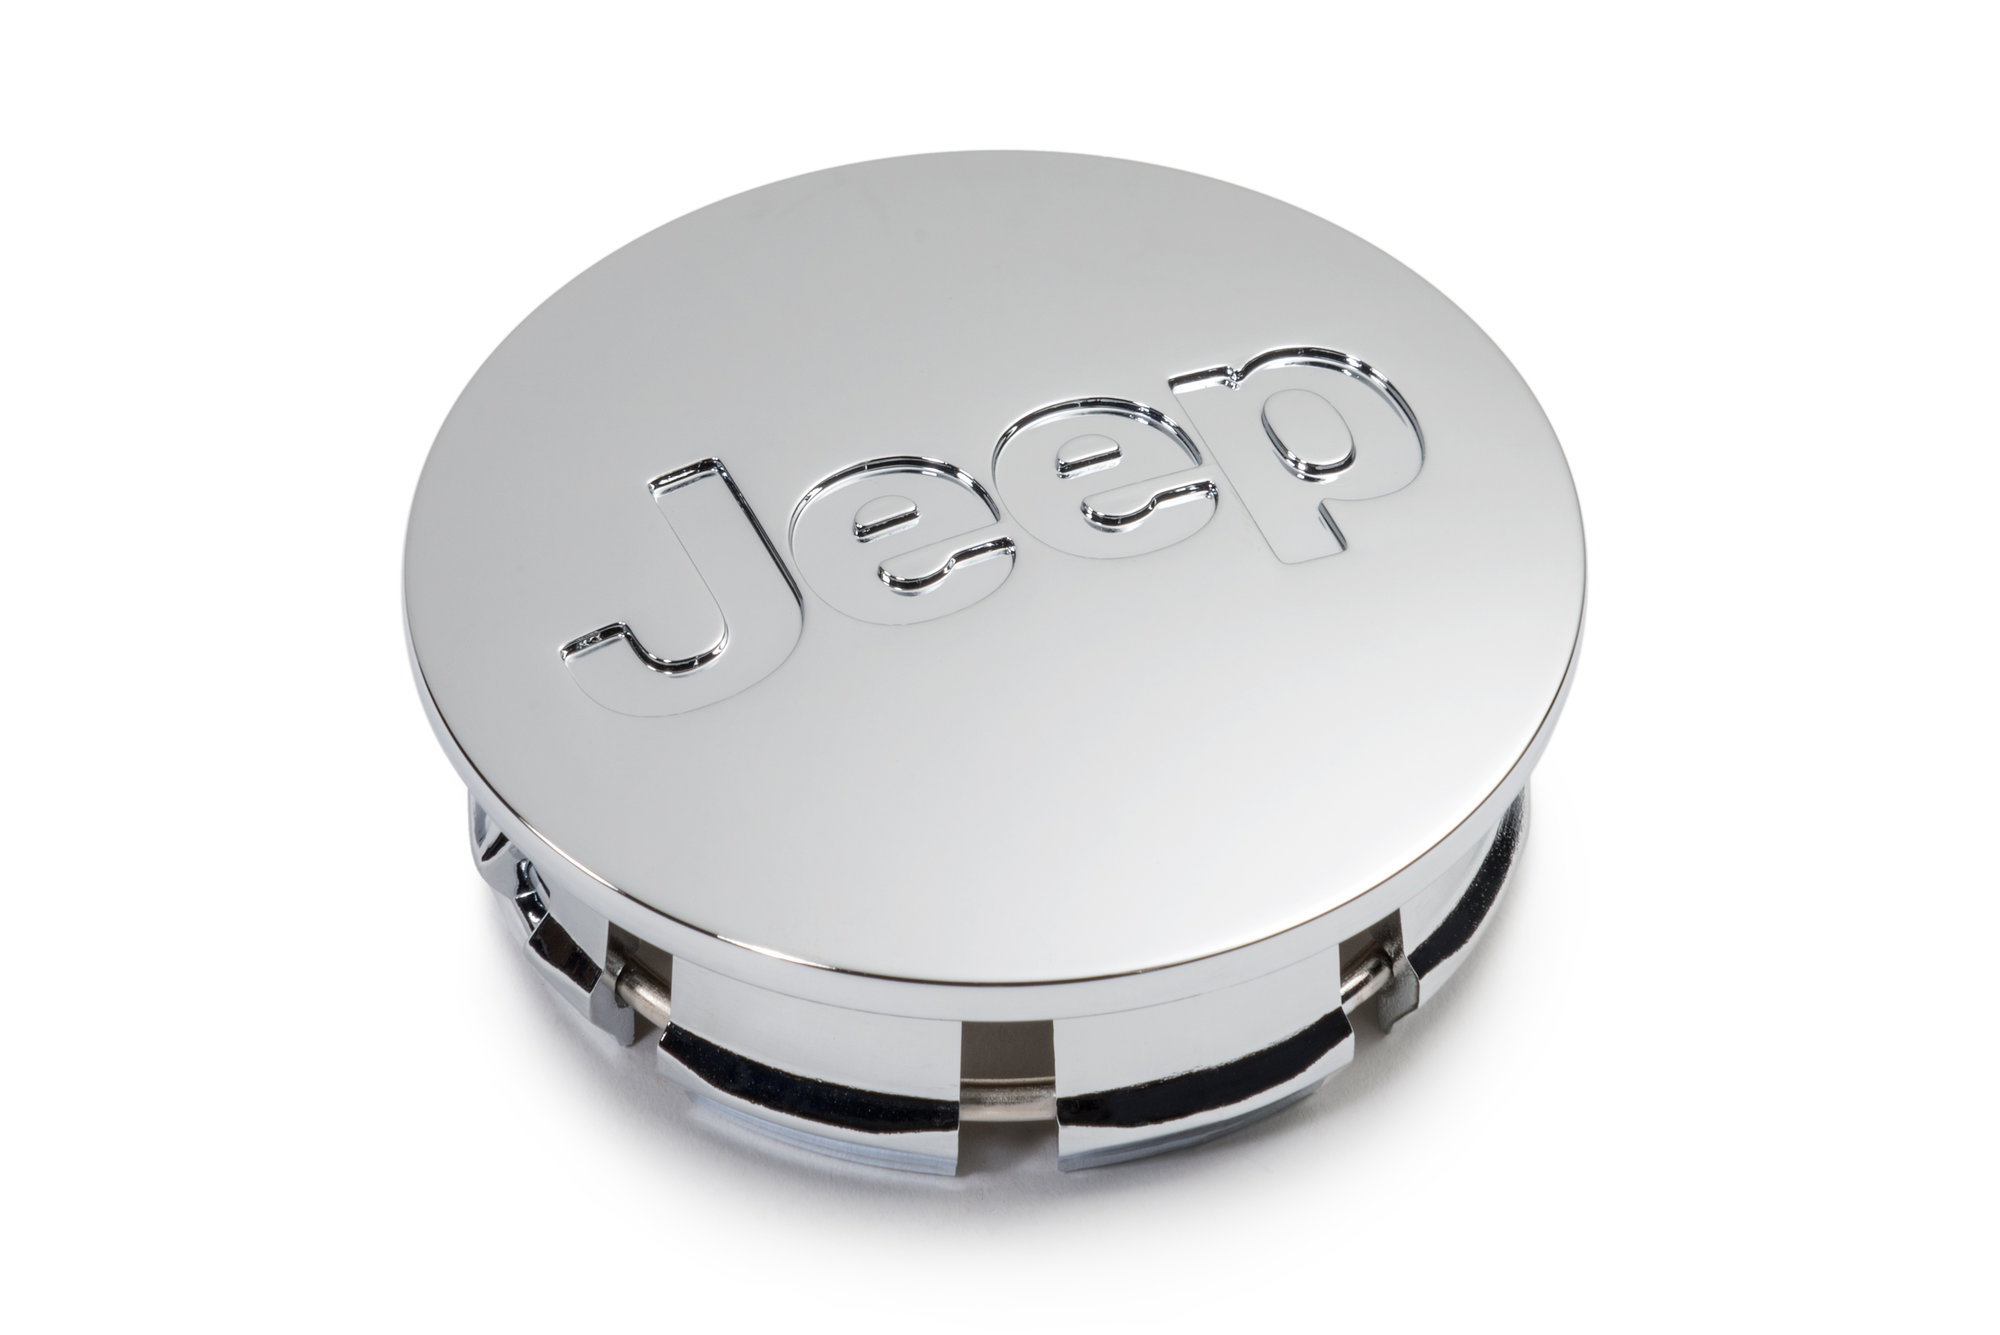 Jeep Grand Cherokee Wheel Center Caps Italy, SAVE 51%